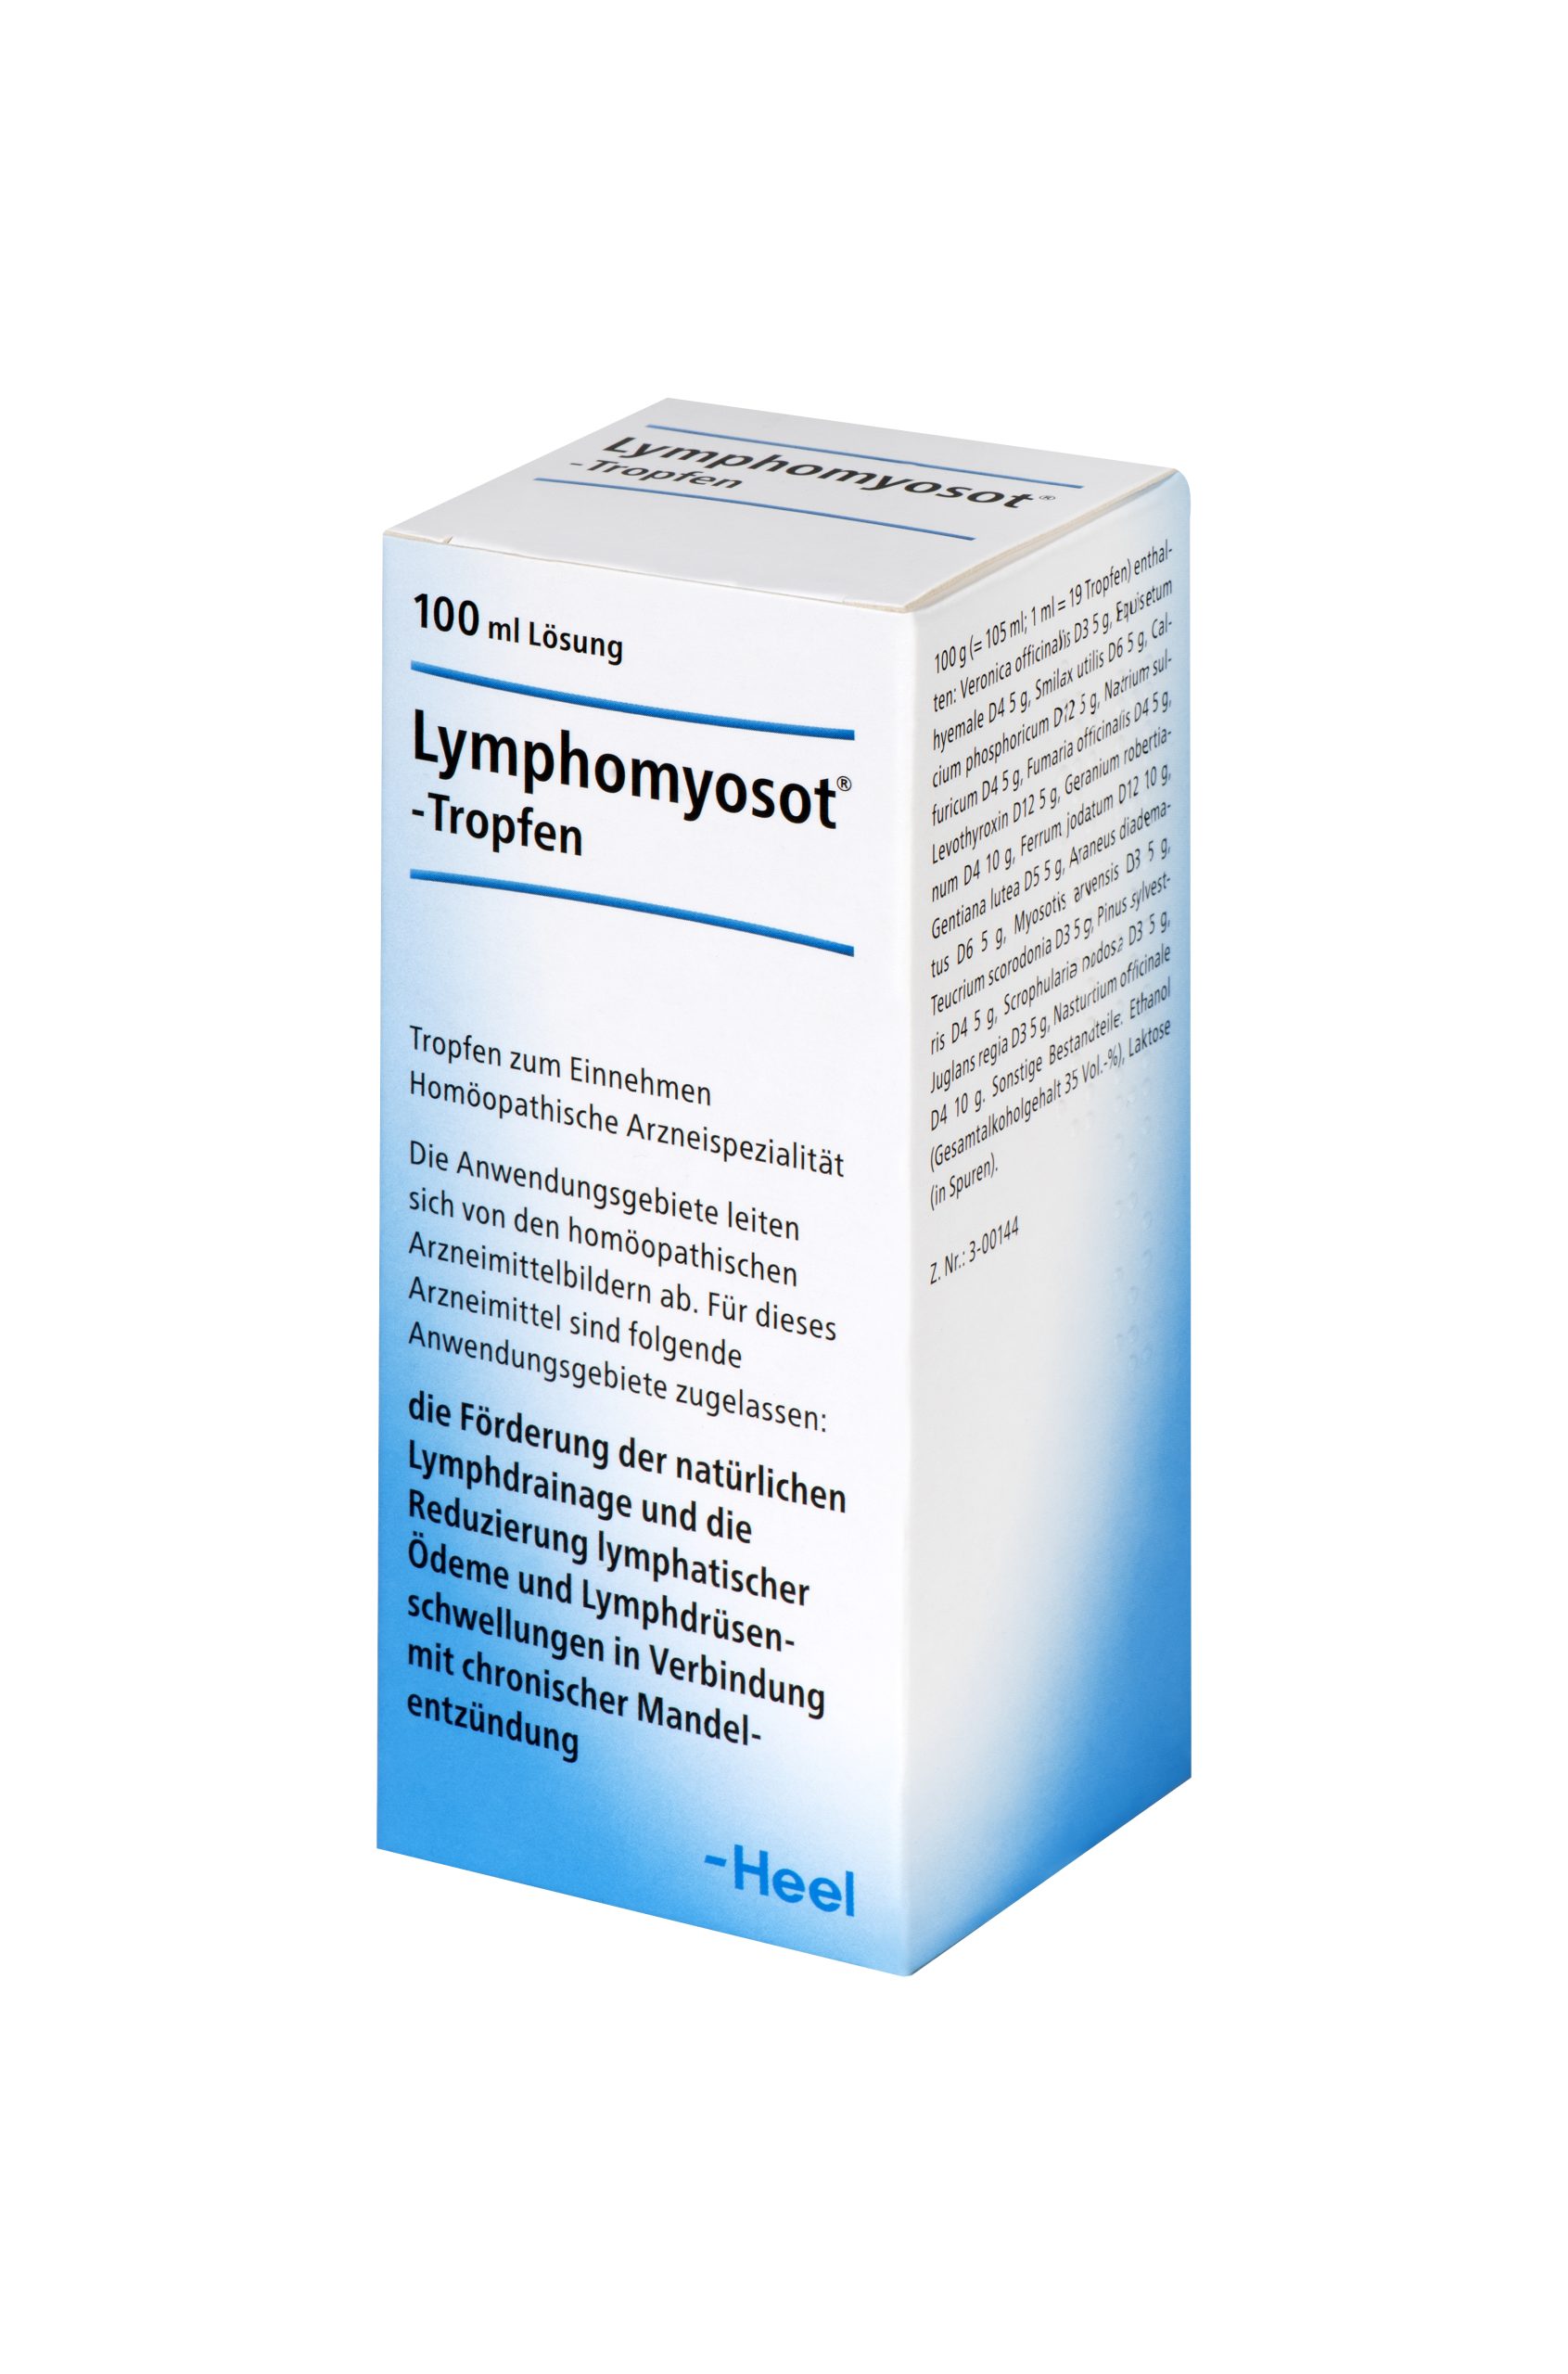 Lymphomyosot Packshot - © Brigitte Gradwohl